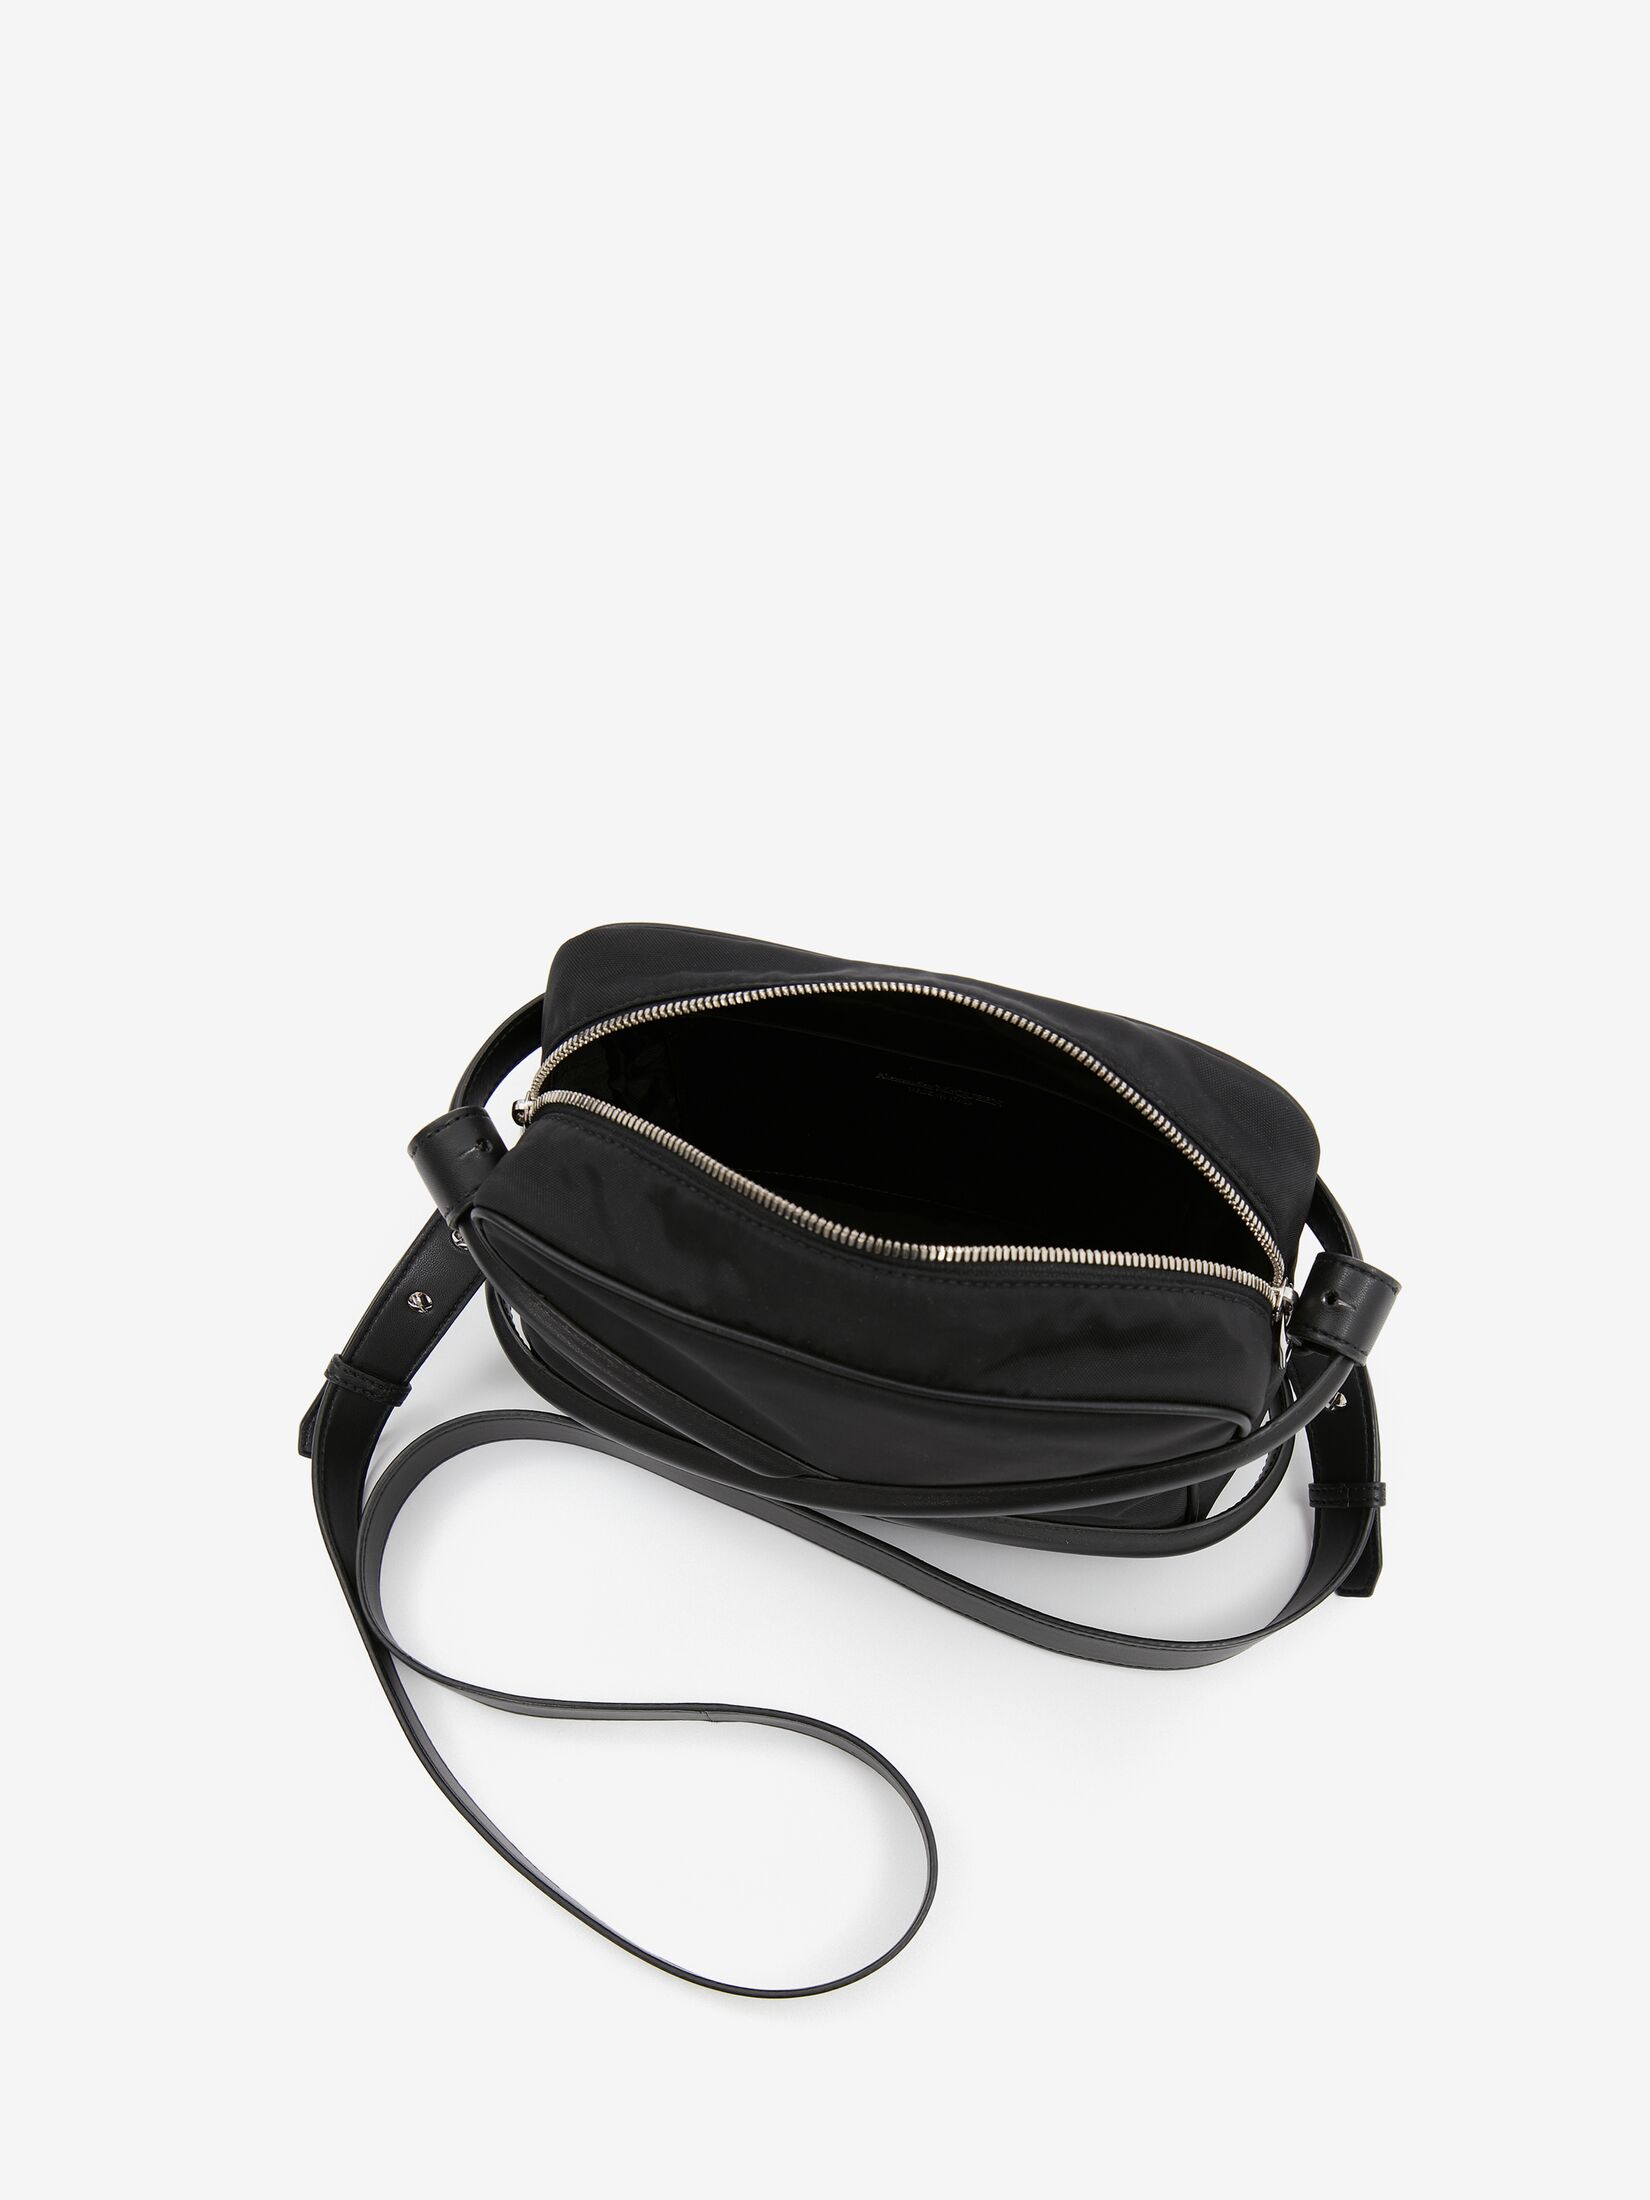 The Harness camera bag in Black | Alexander McQueen GB